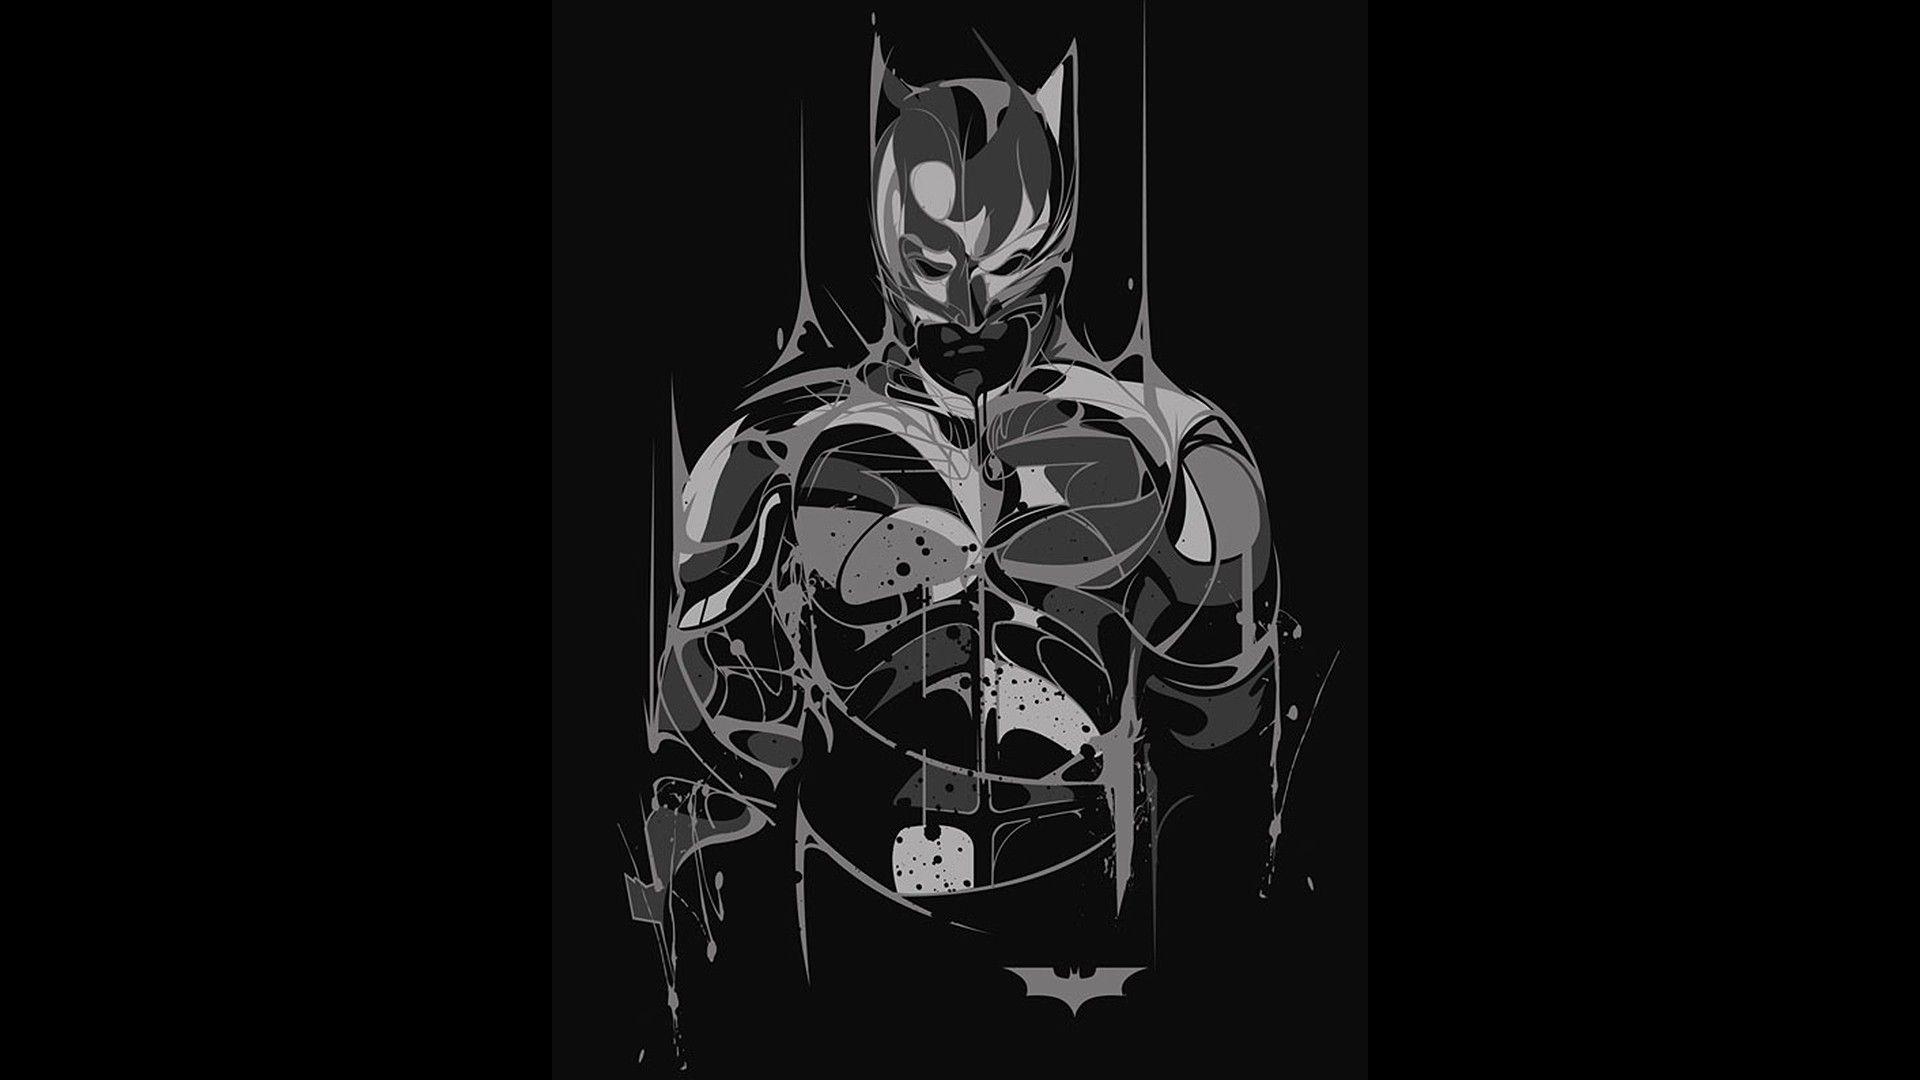 Batman, DC Comics, bat, hero, fan art, black background, Bruce Wayne